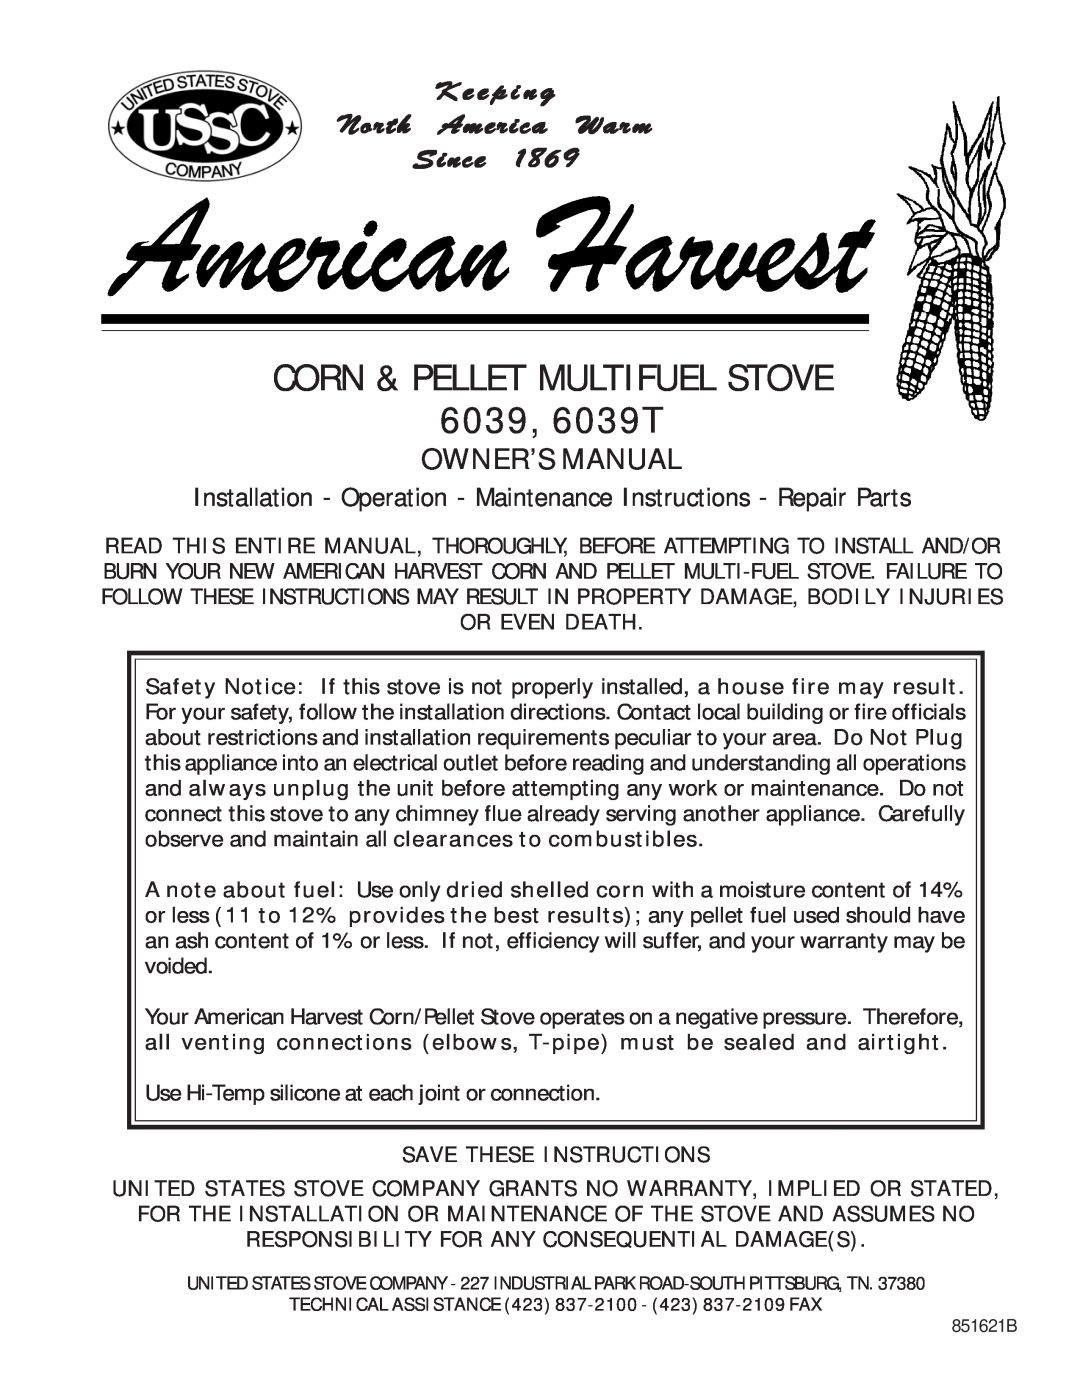 United States Stove owner manual Corn & Pellet Multifuel Stove, 6039, 6039T, K e e p i n g North America Warm Since 